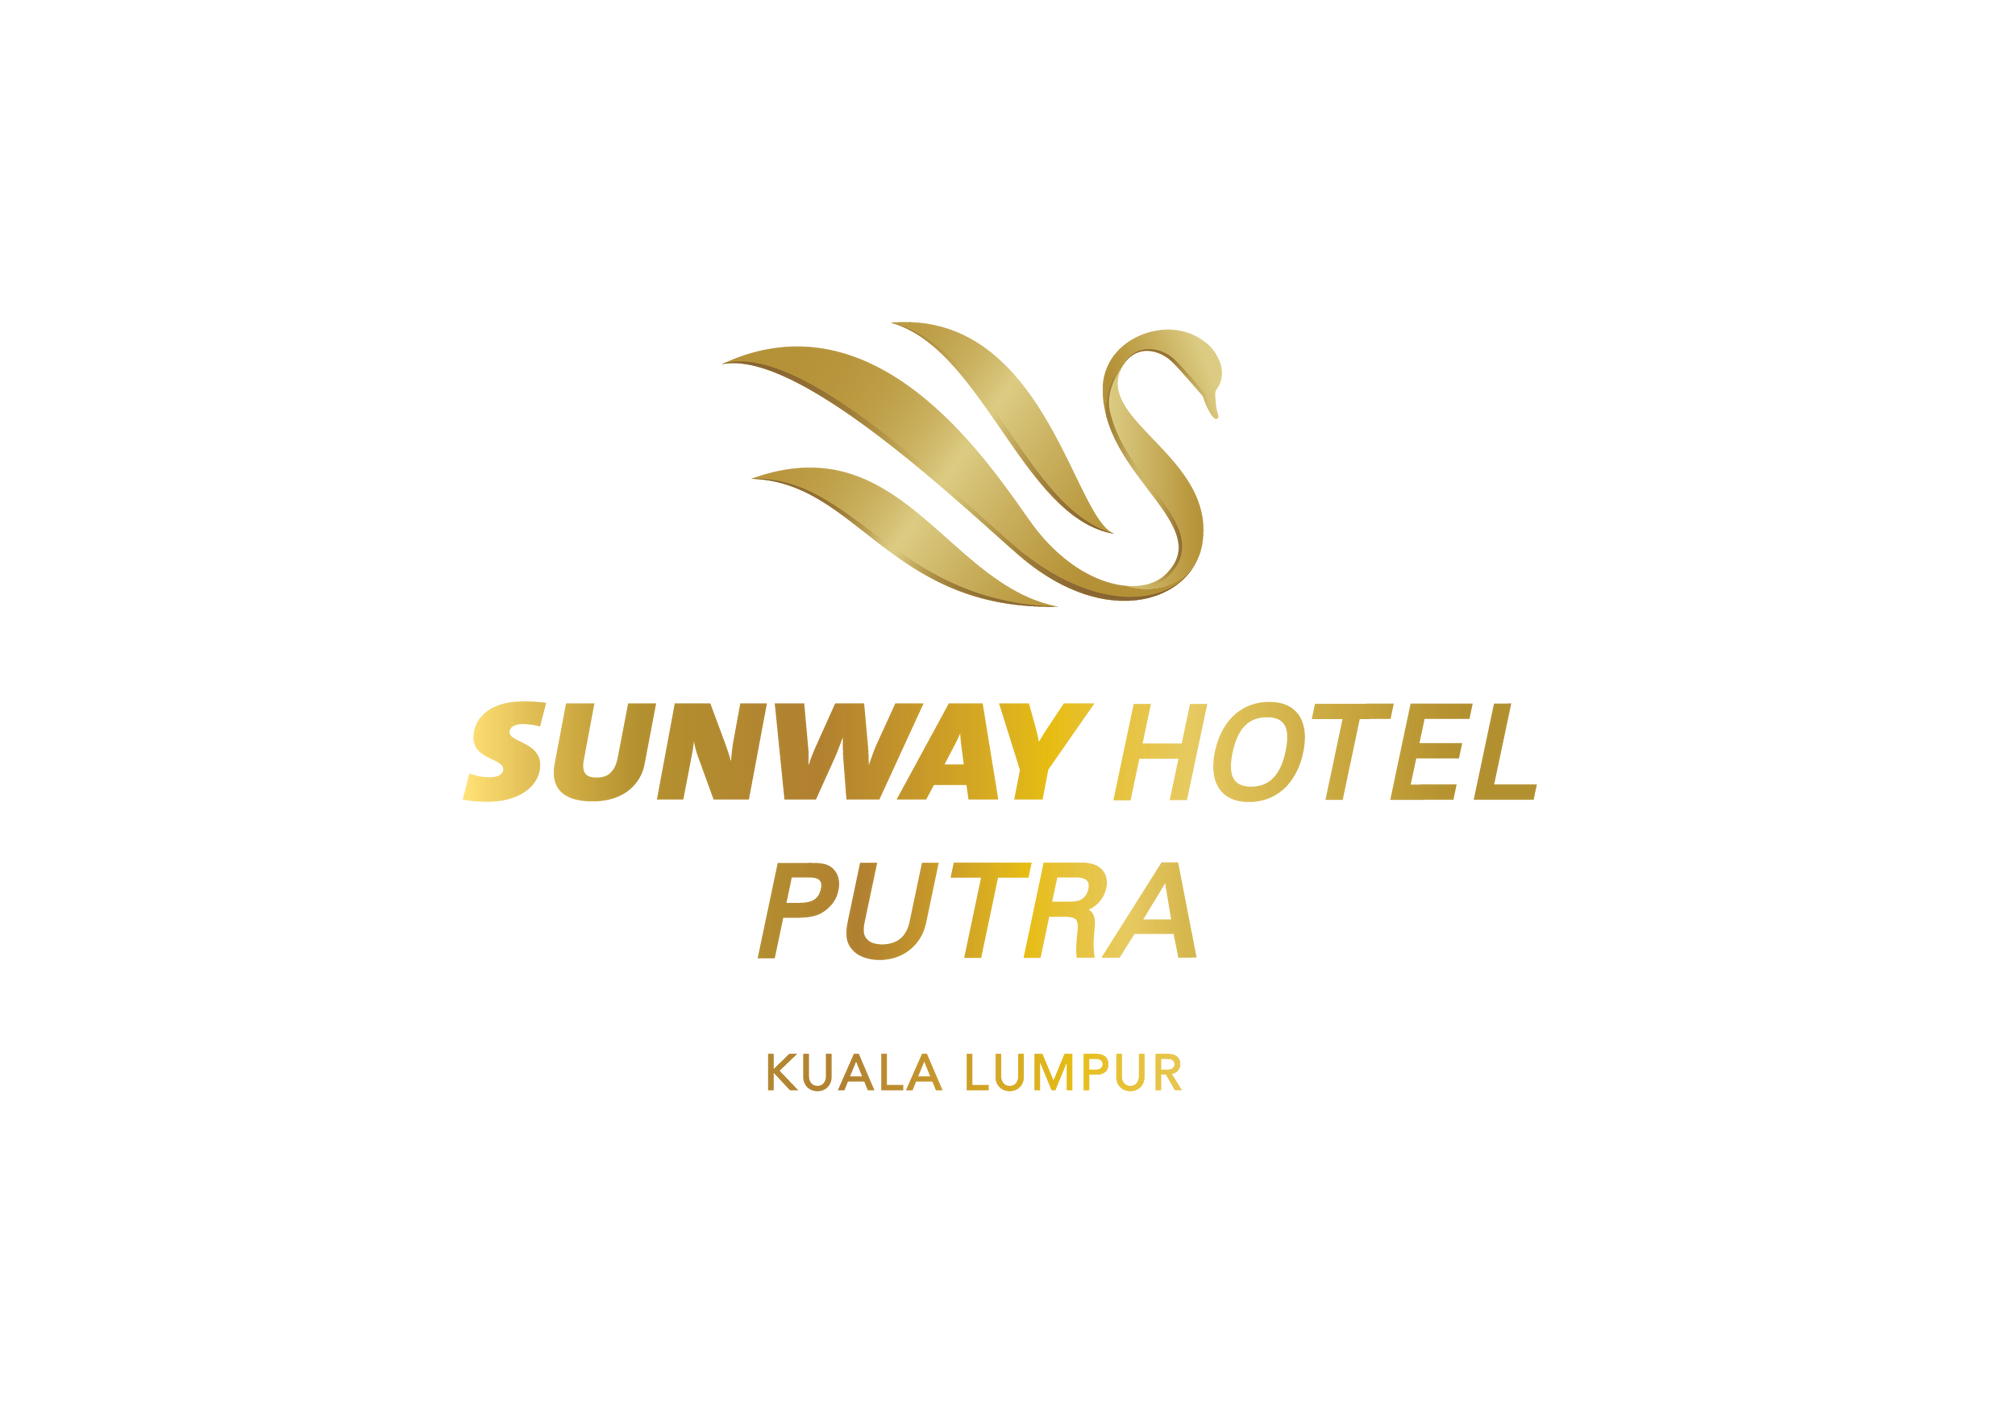 Gold logo of Sunway Putra Hotel Kuala Lumpur